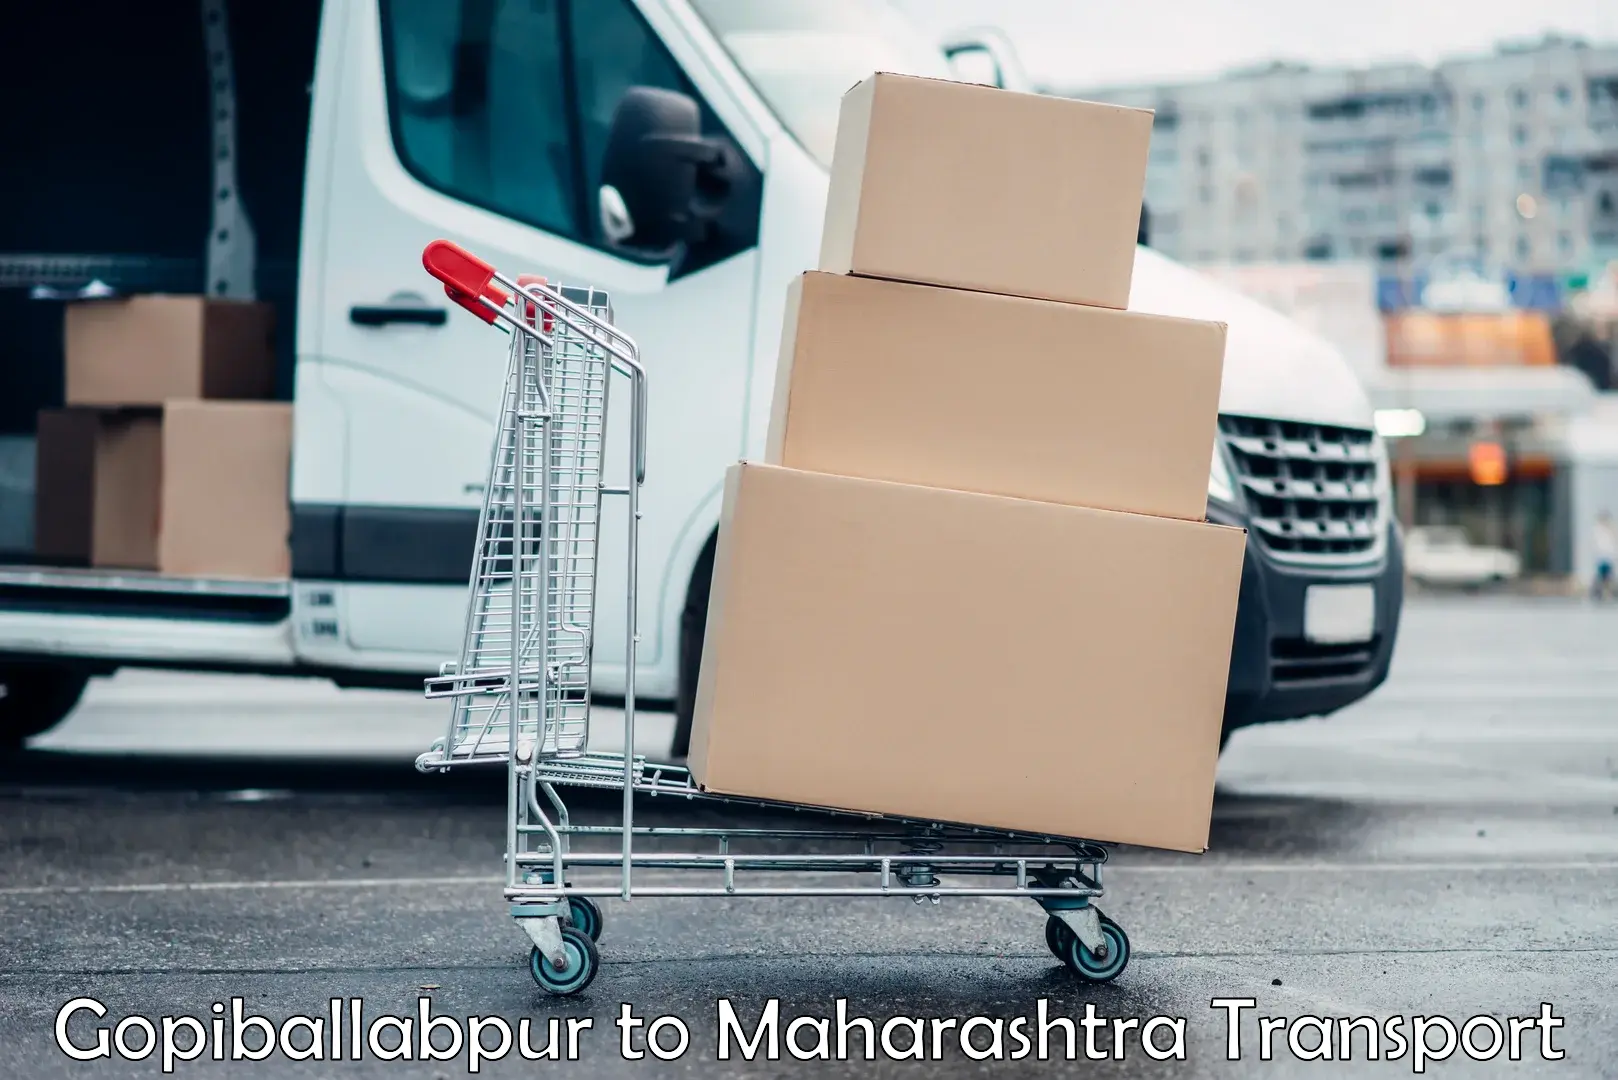 Furniture transport service Gopiballabpur to Vasmat